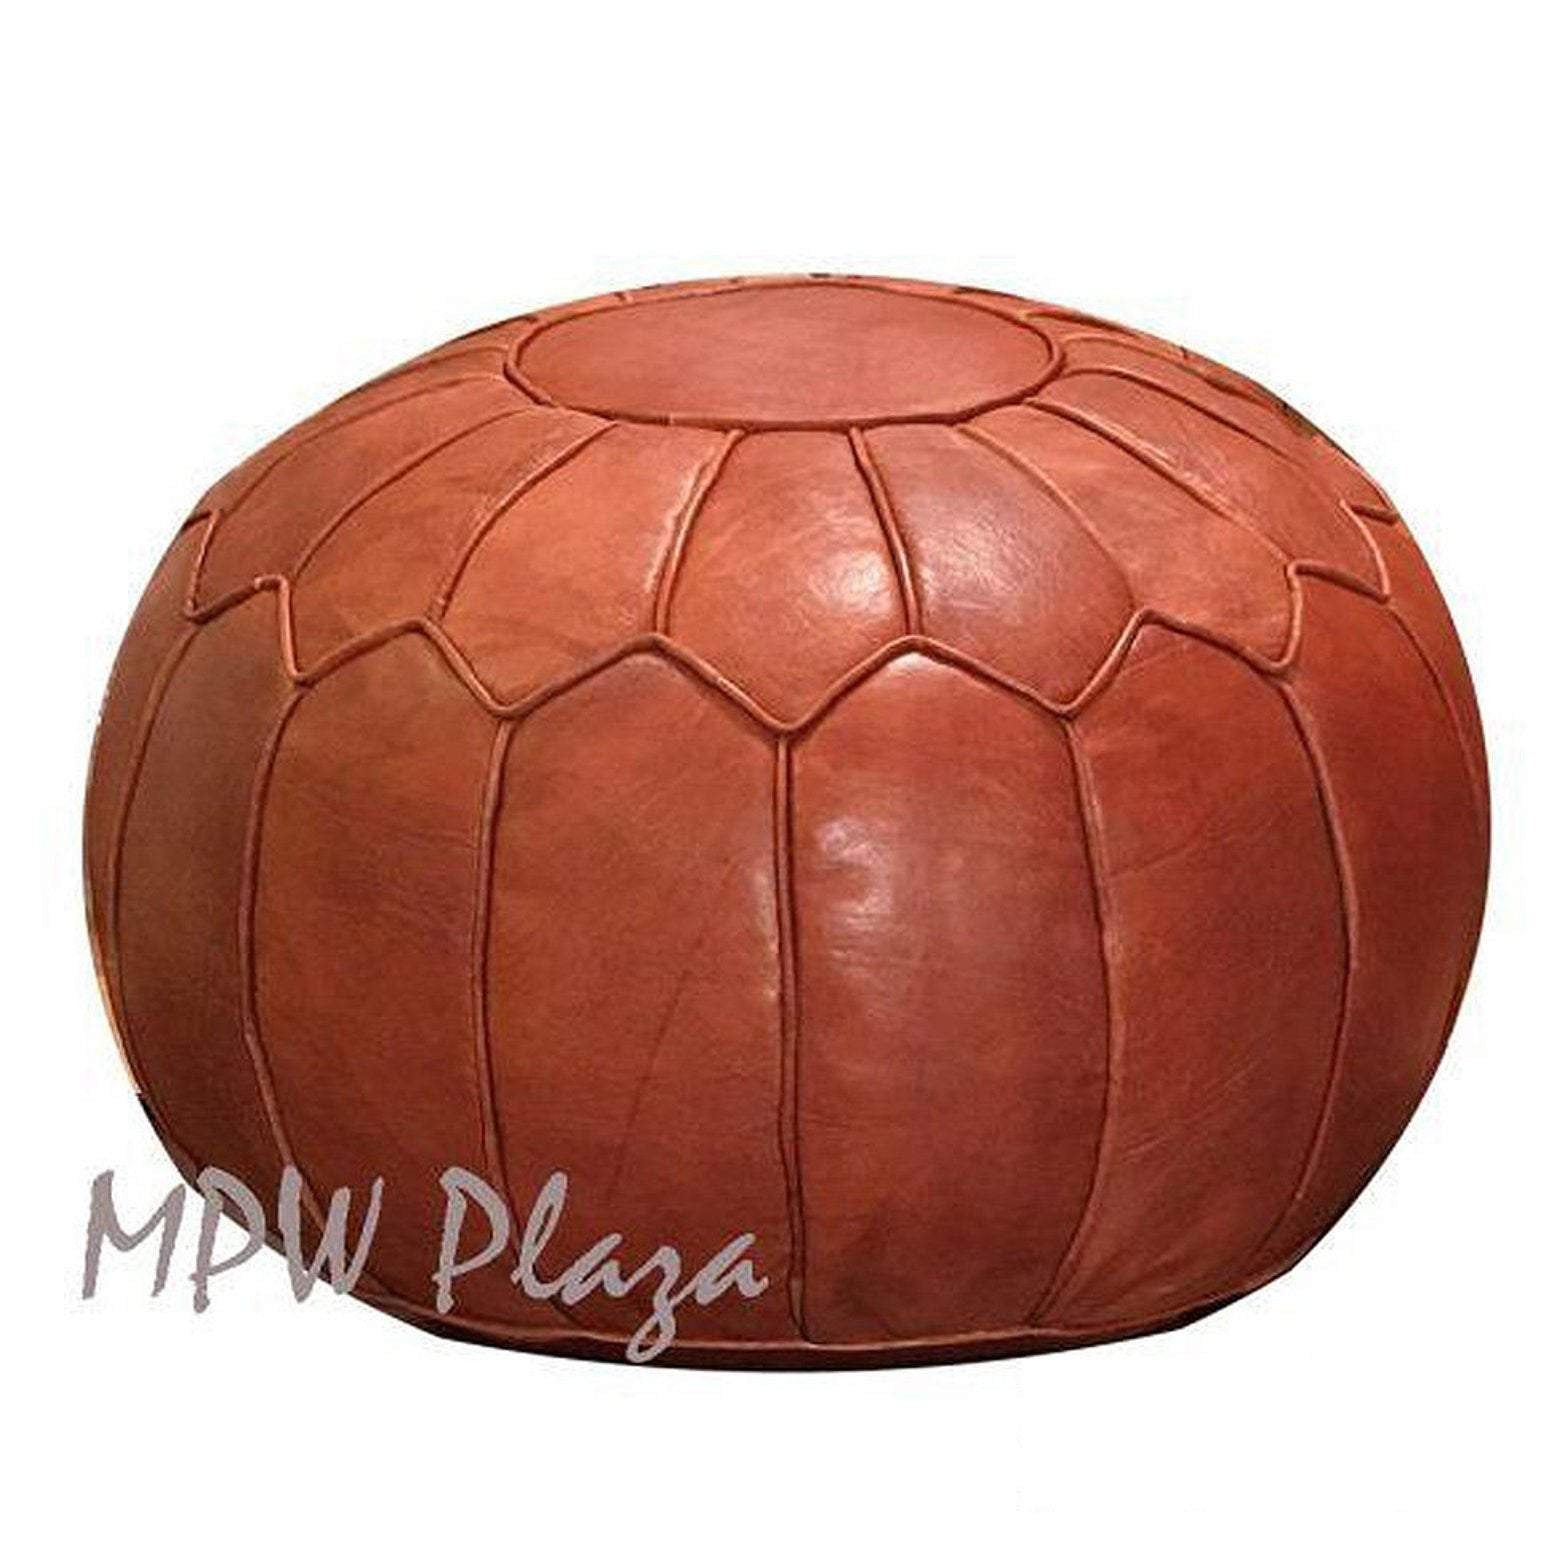 MPW Plaza® Retro Moroccan Pouf Rustic Brown tone 14 x 20 Topshelf Moroccan Leather,  ottoman (Stuffed) freeshipping - MPW Plaza®